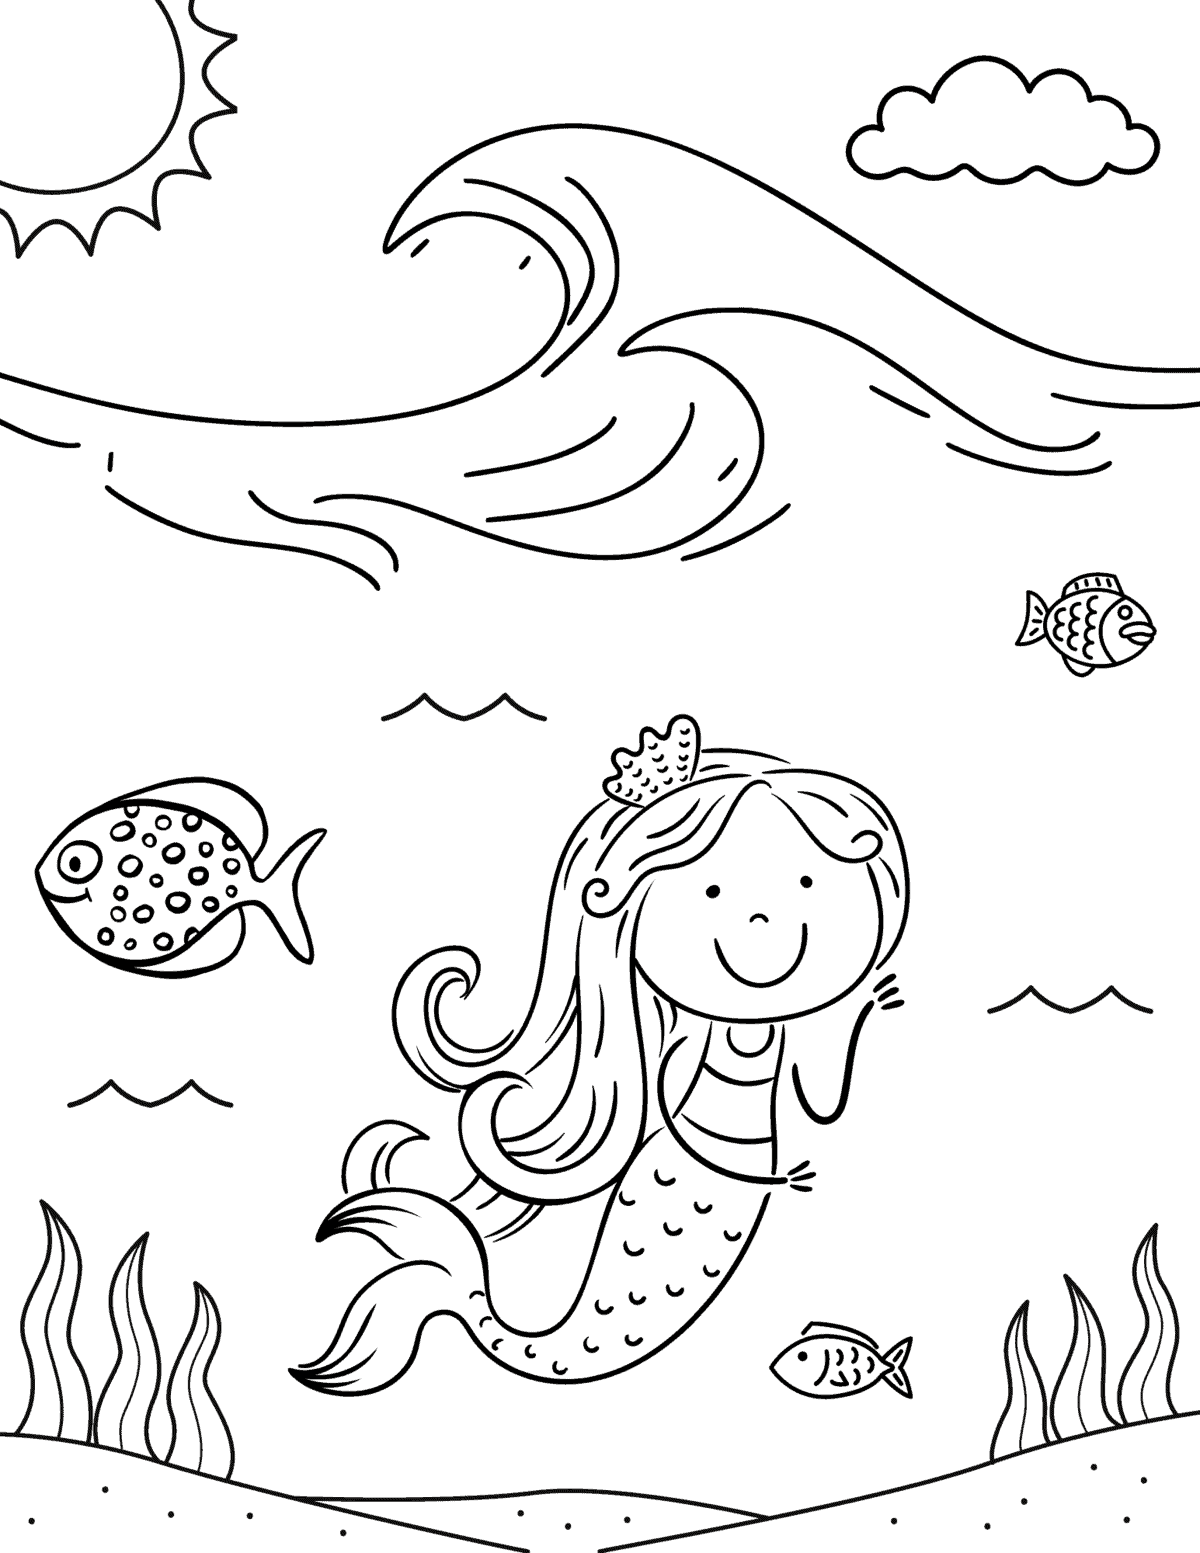 smiling mermaid coloring page